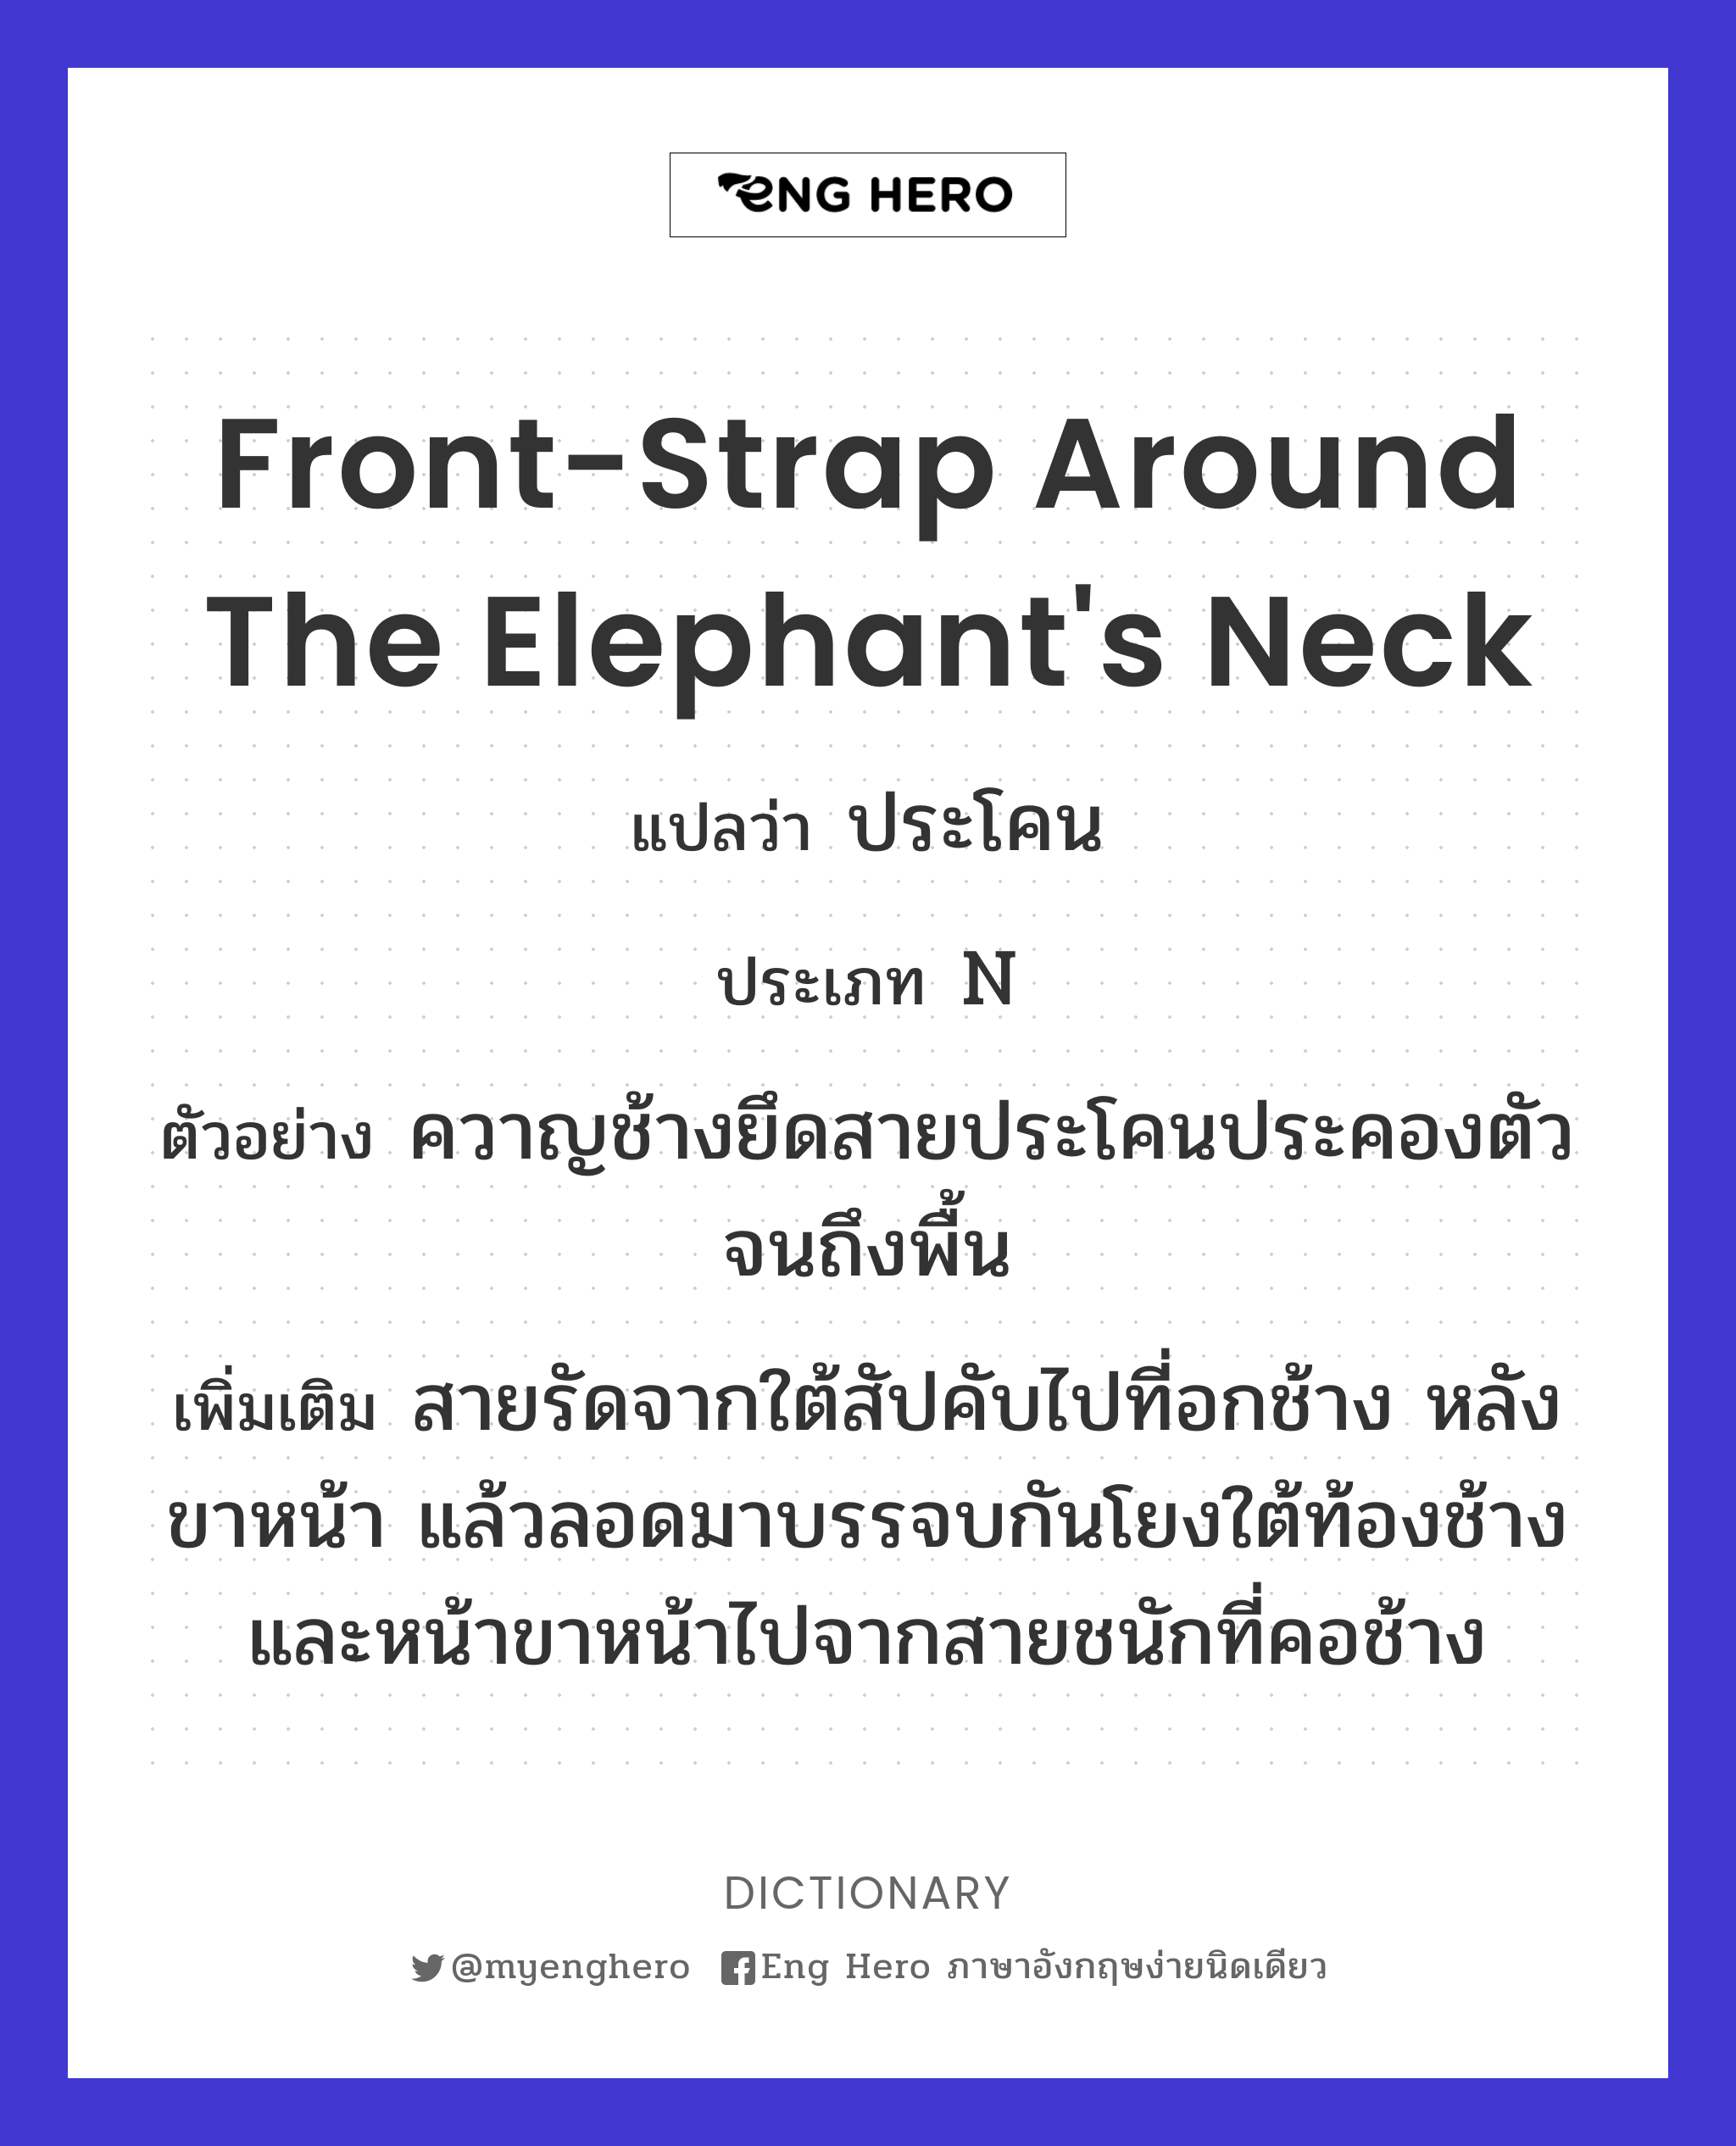 front-strap around the elephant's neck